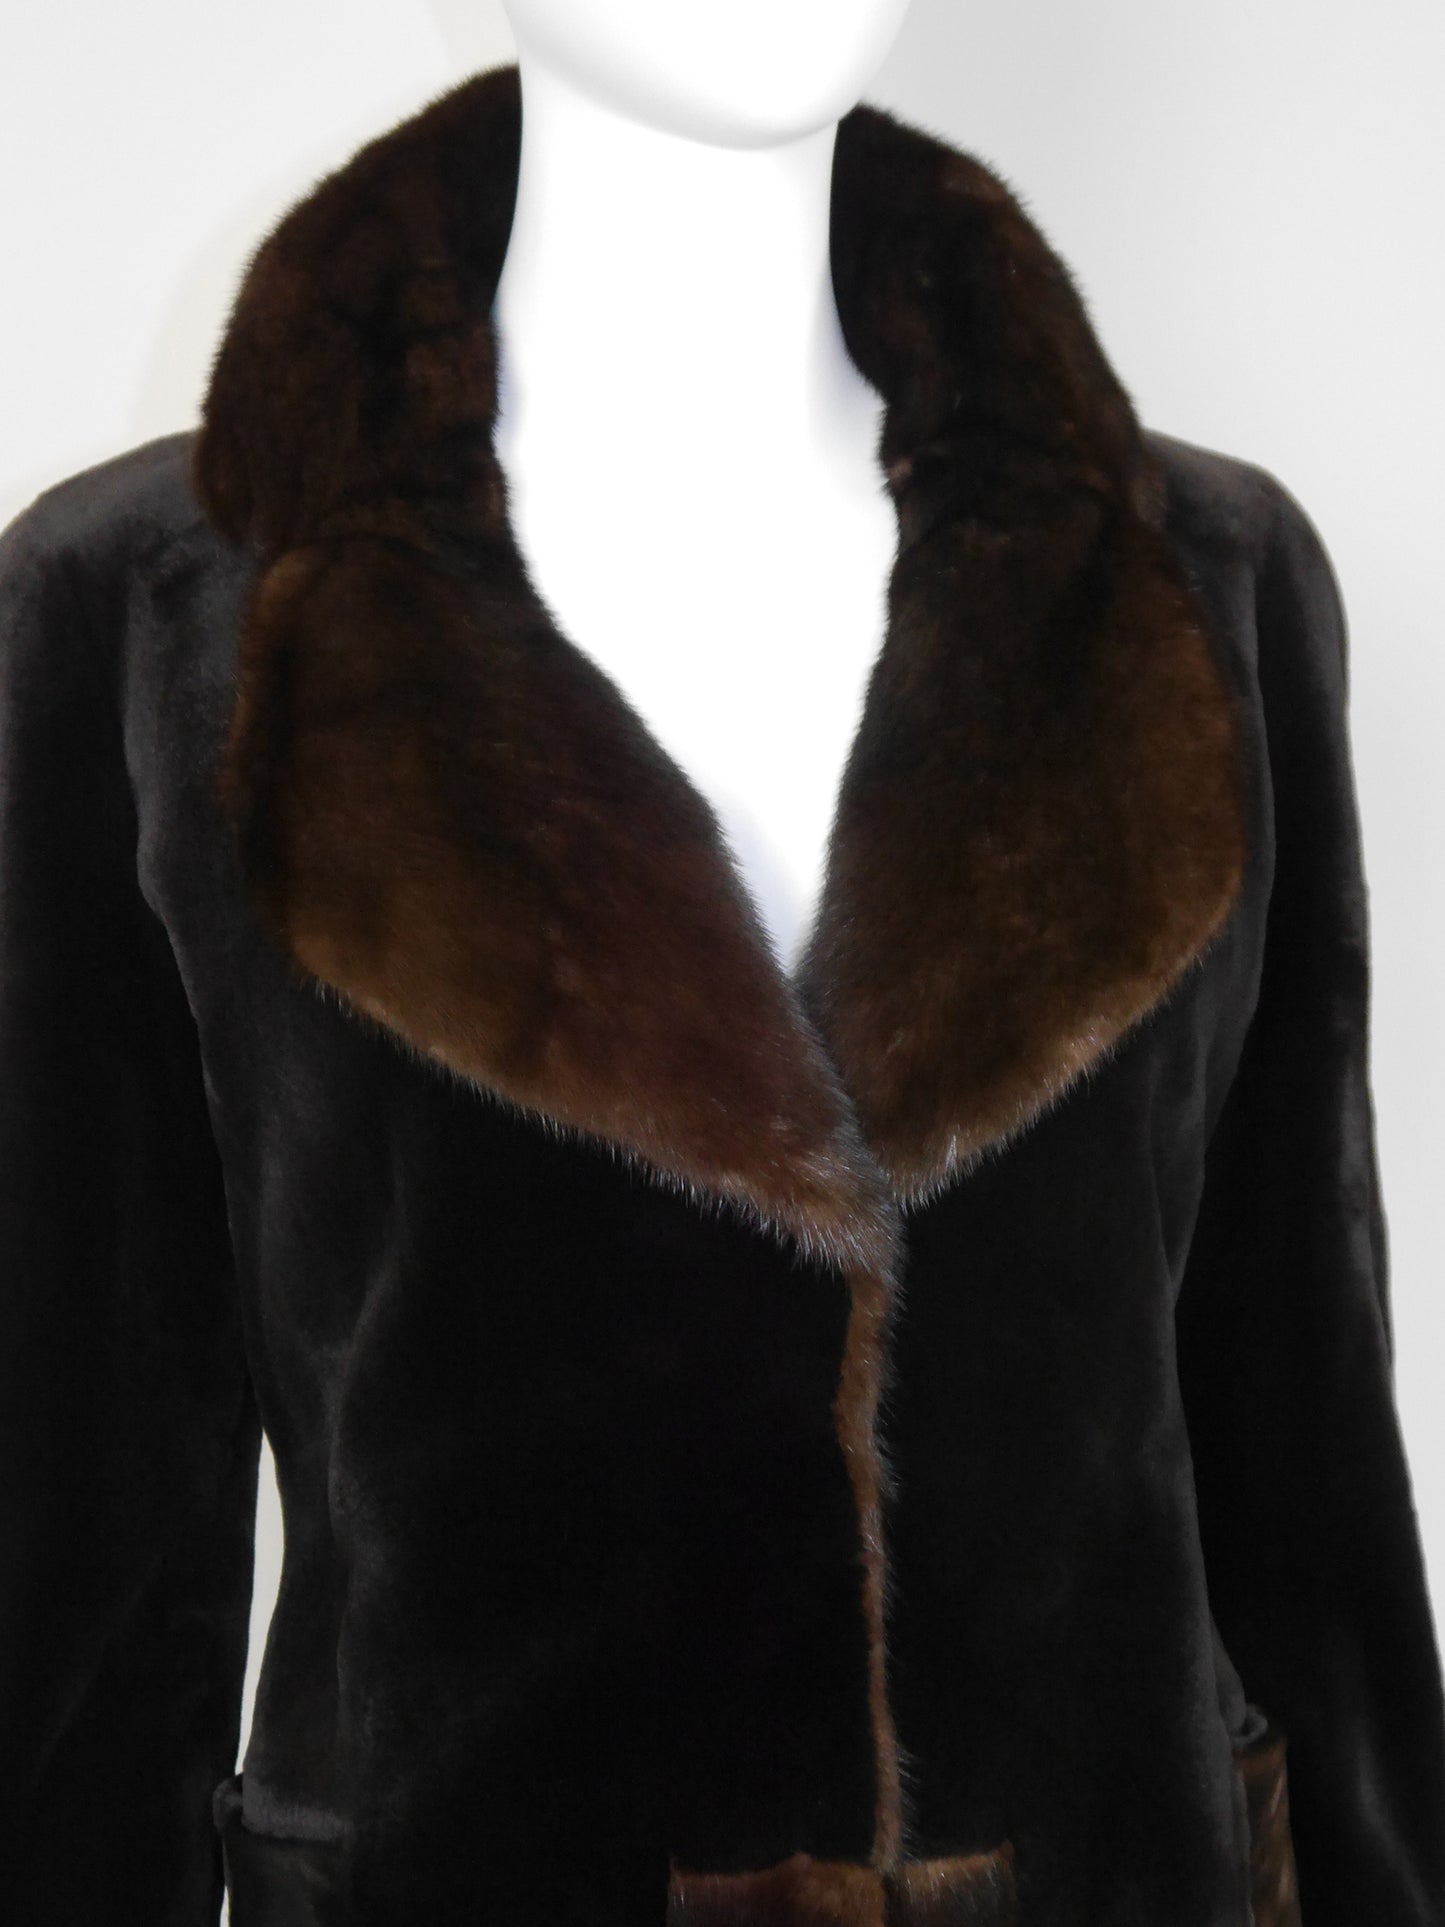 GIANFRANCO FERRÉ 2000s Vintage Sheared Mink Fur Jacket w/ Sculpted Collar Size XS-S